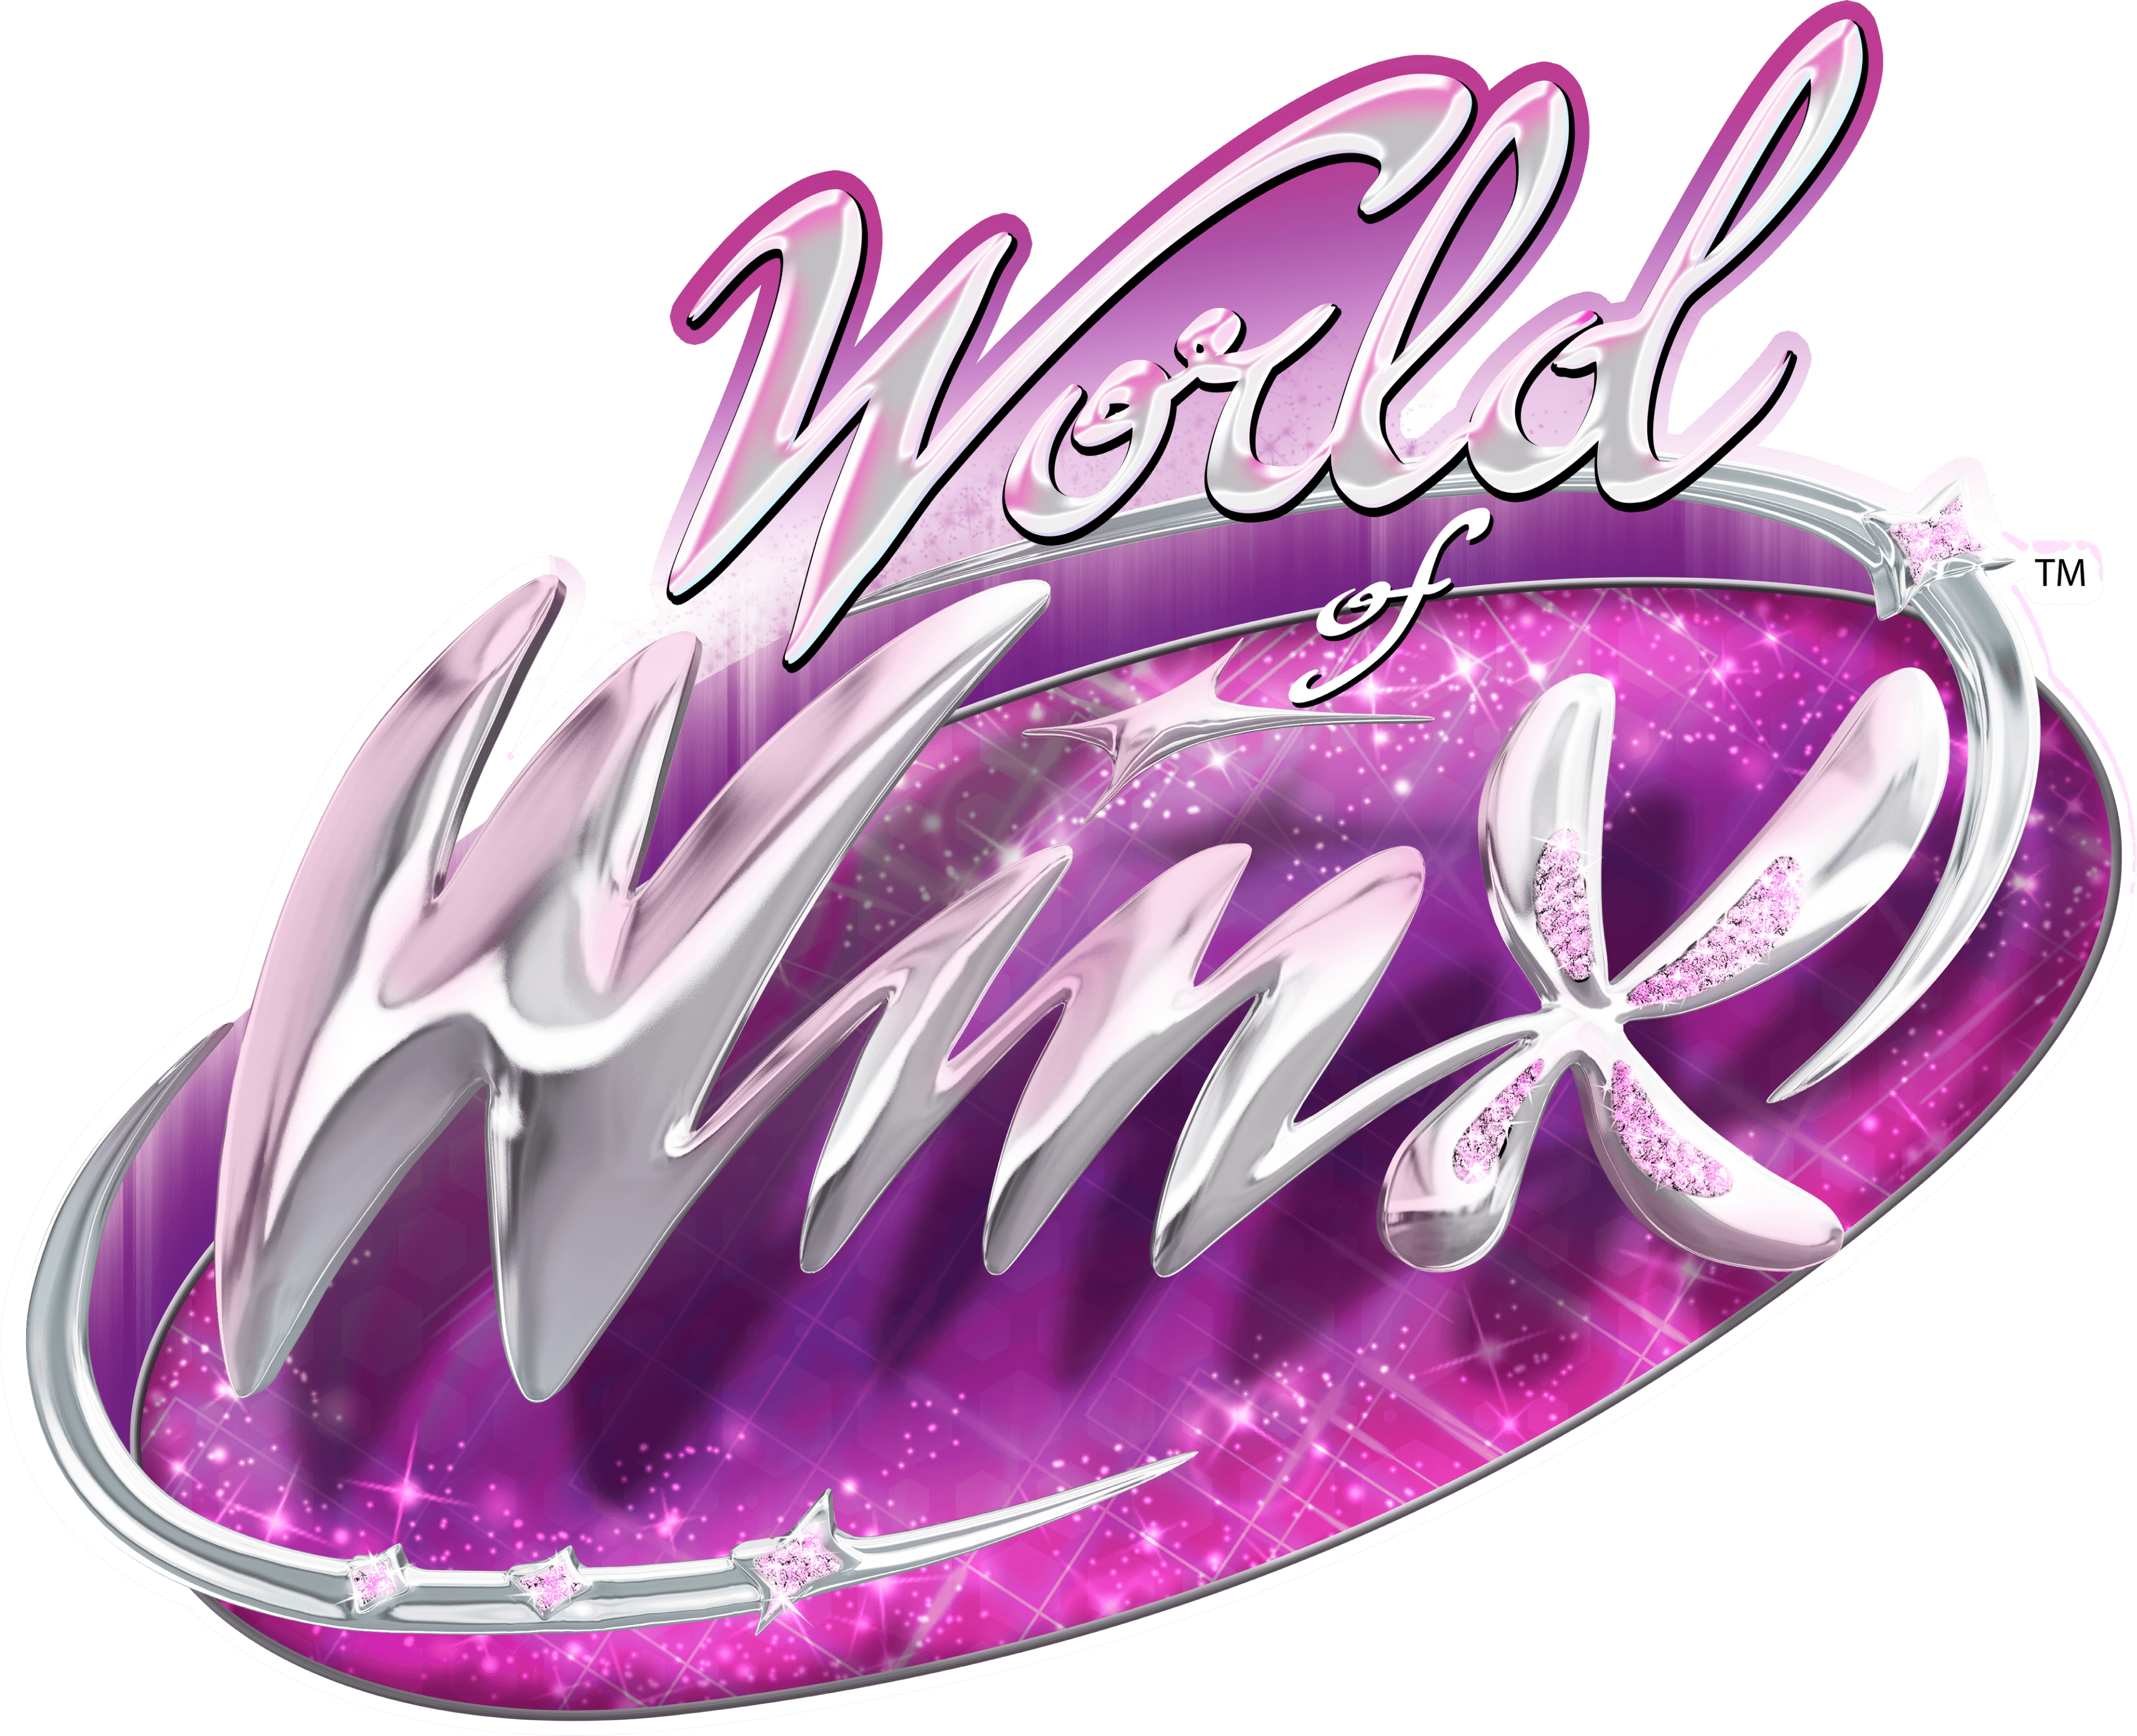 World of Winx logo